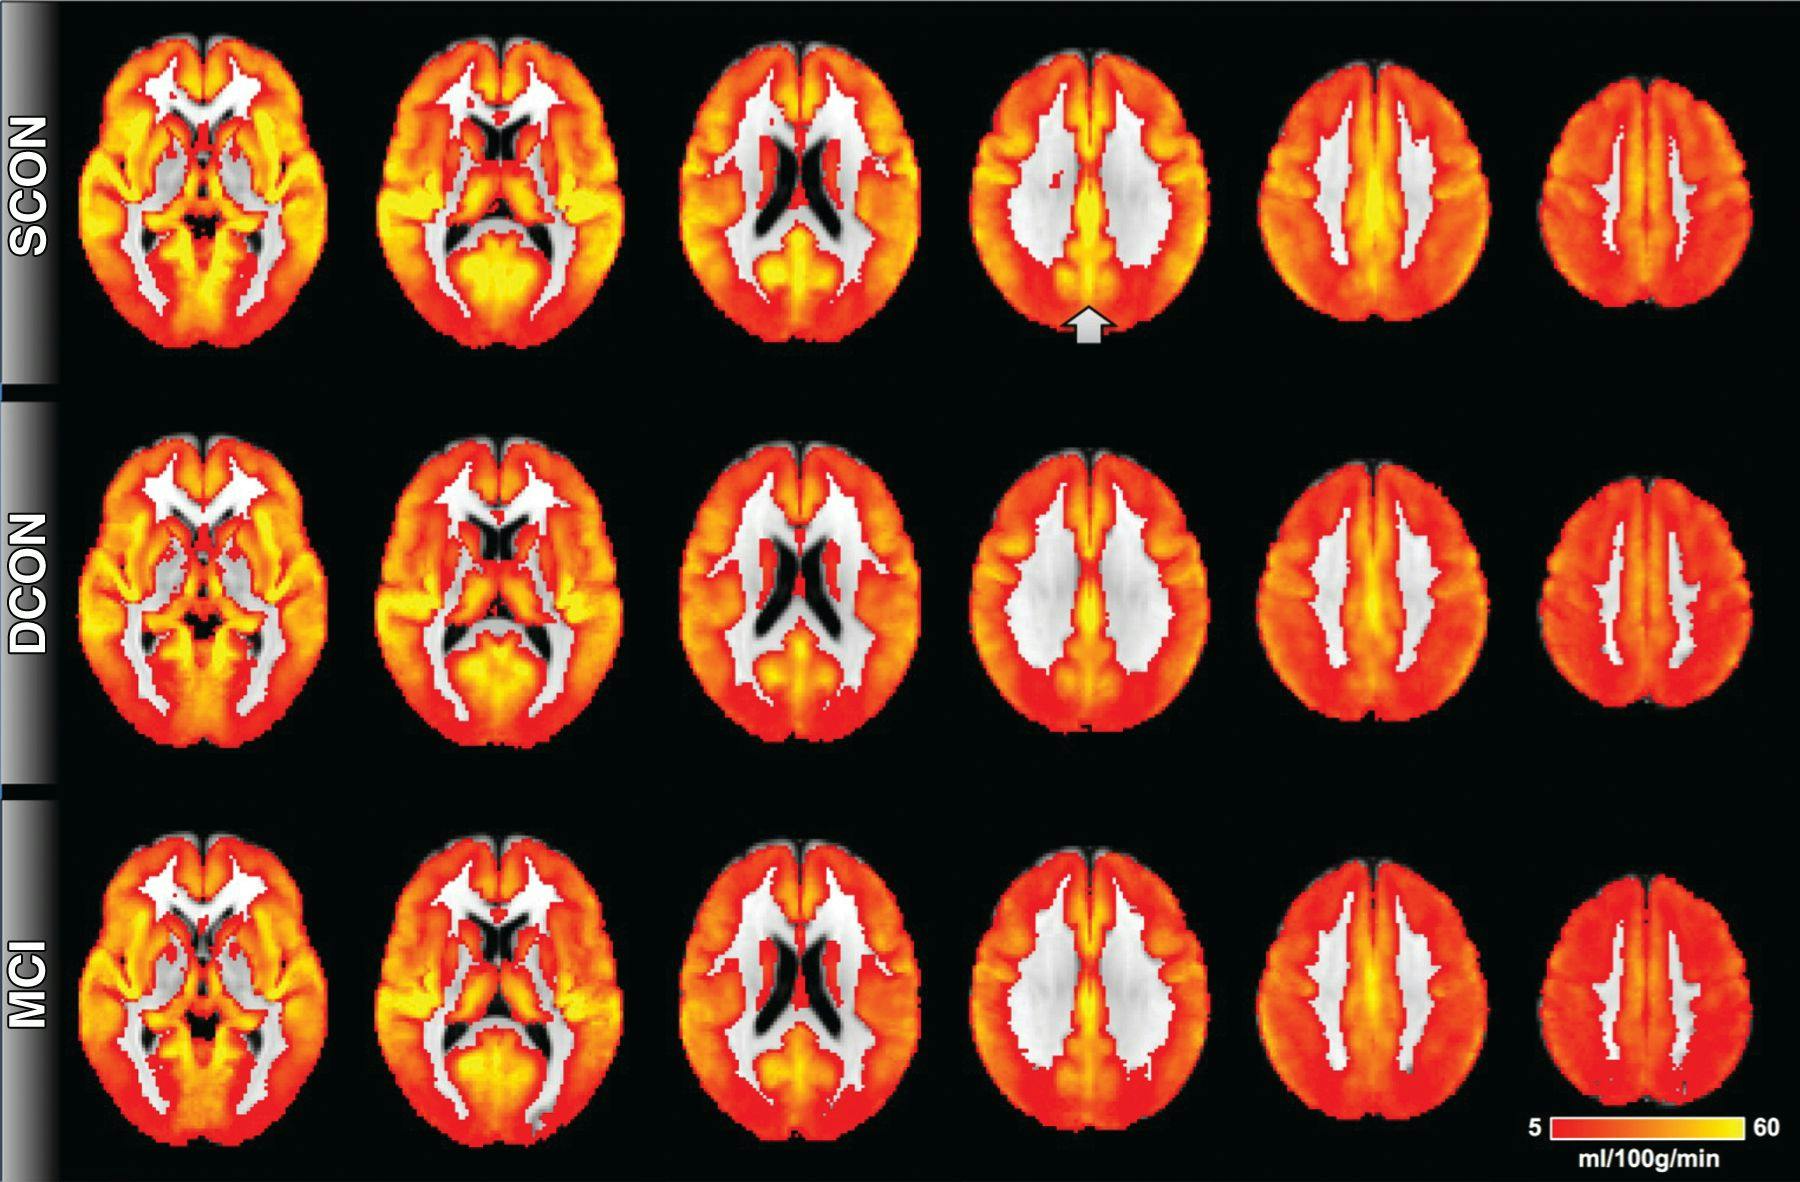 MRI Technique May Show Cognitive Decline Before Symptoms